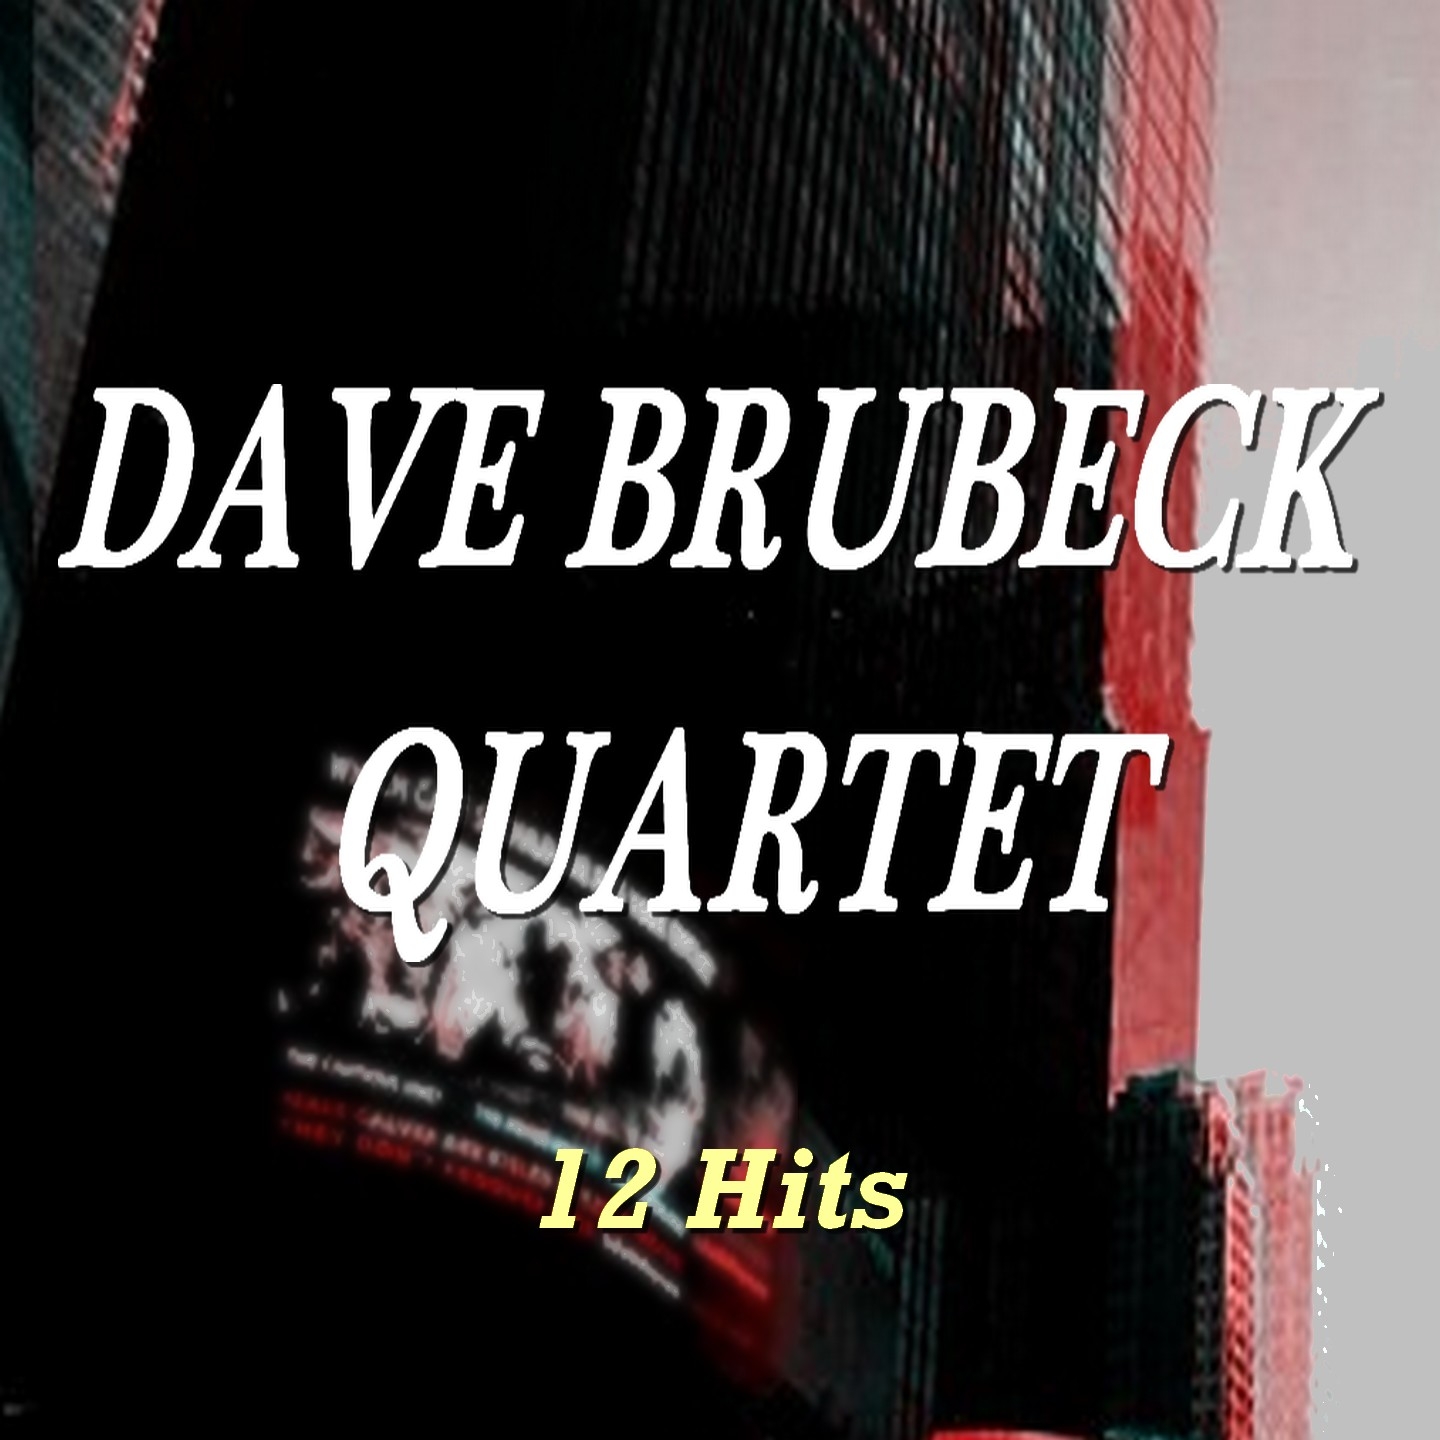 Dave Brubeck Quartet (12 Hits)